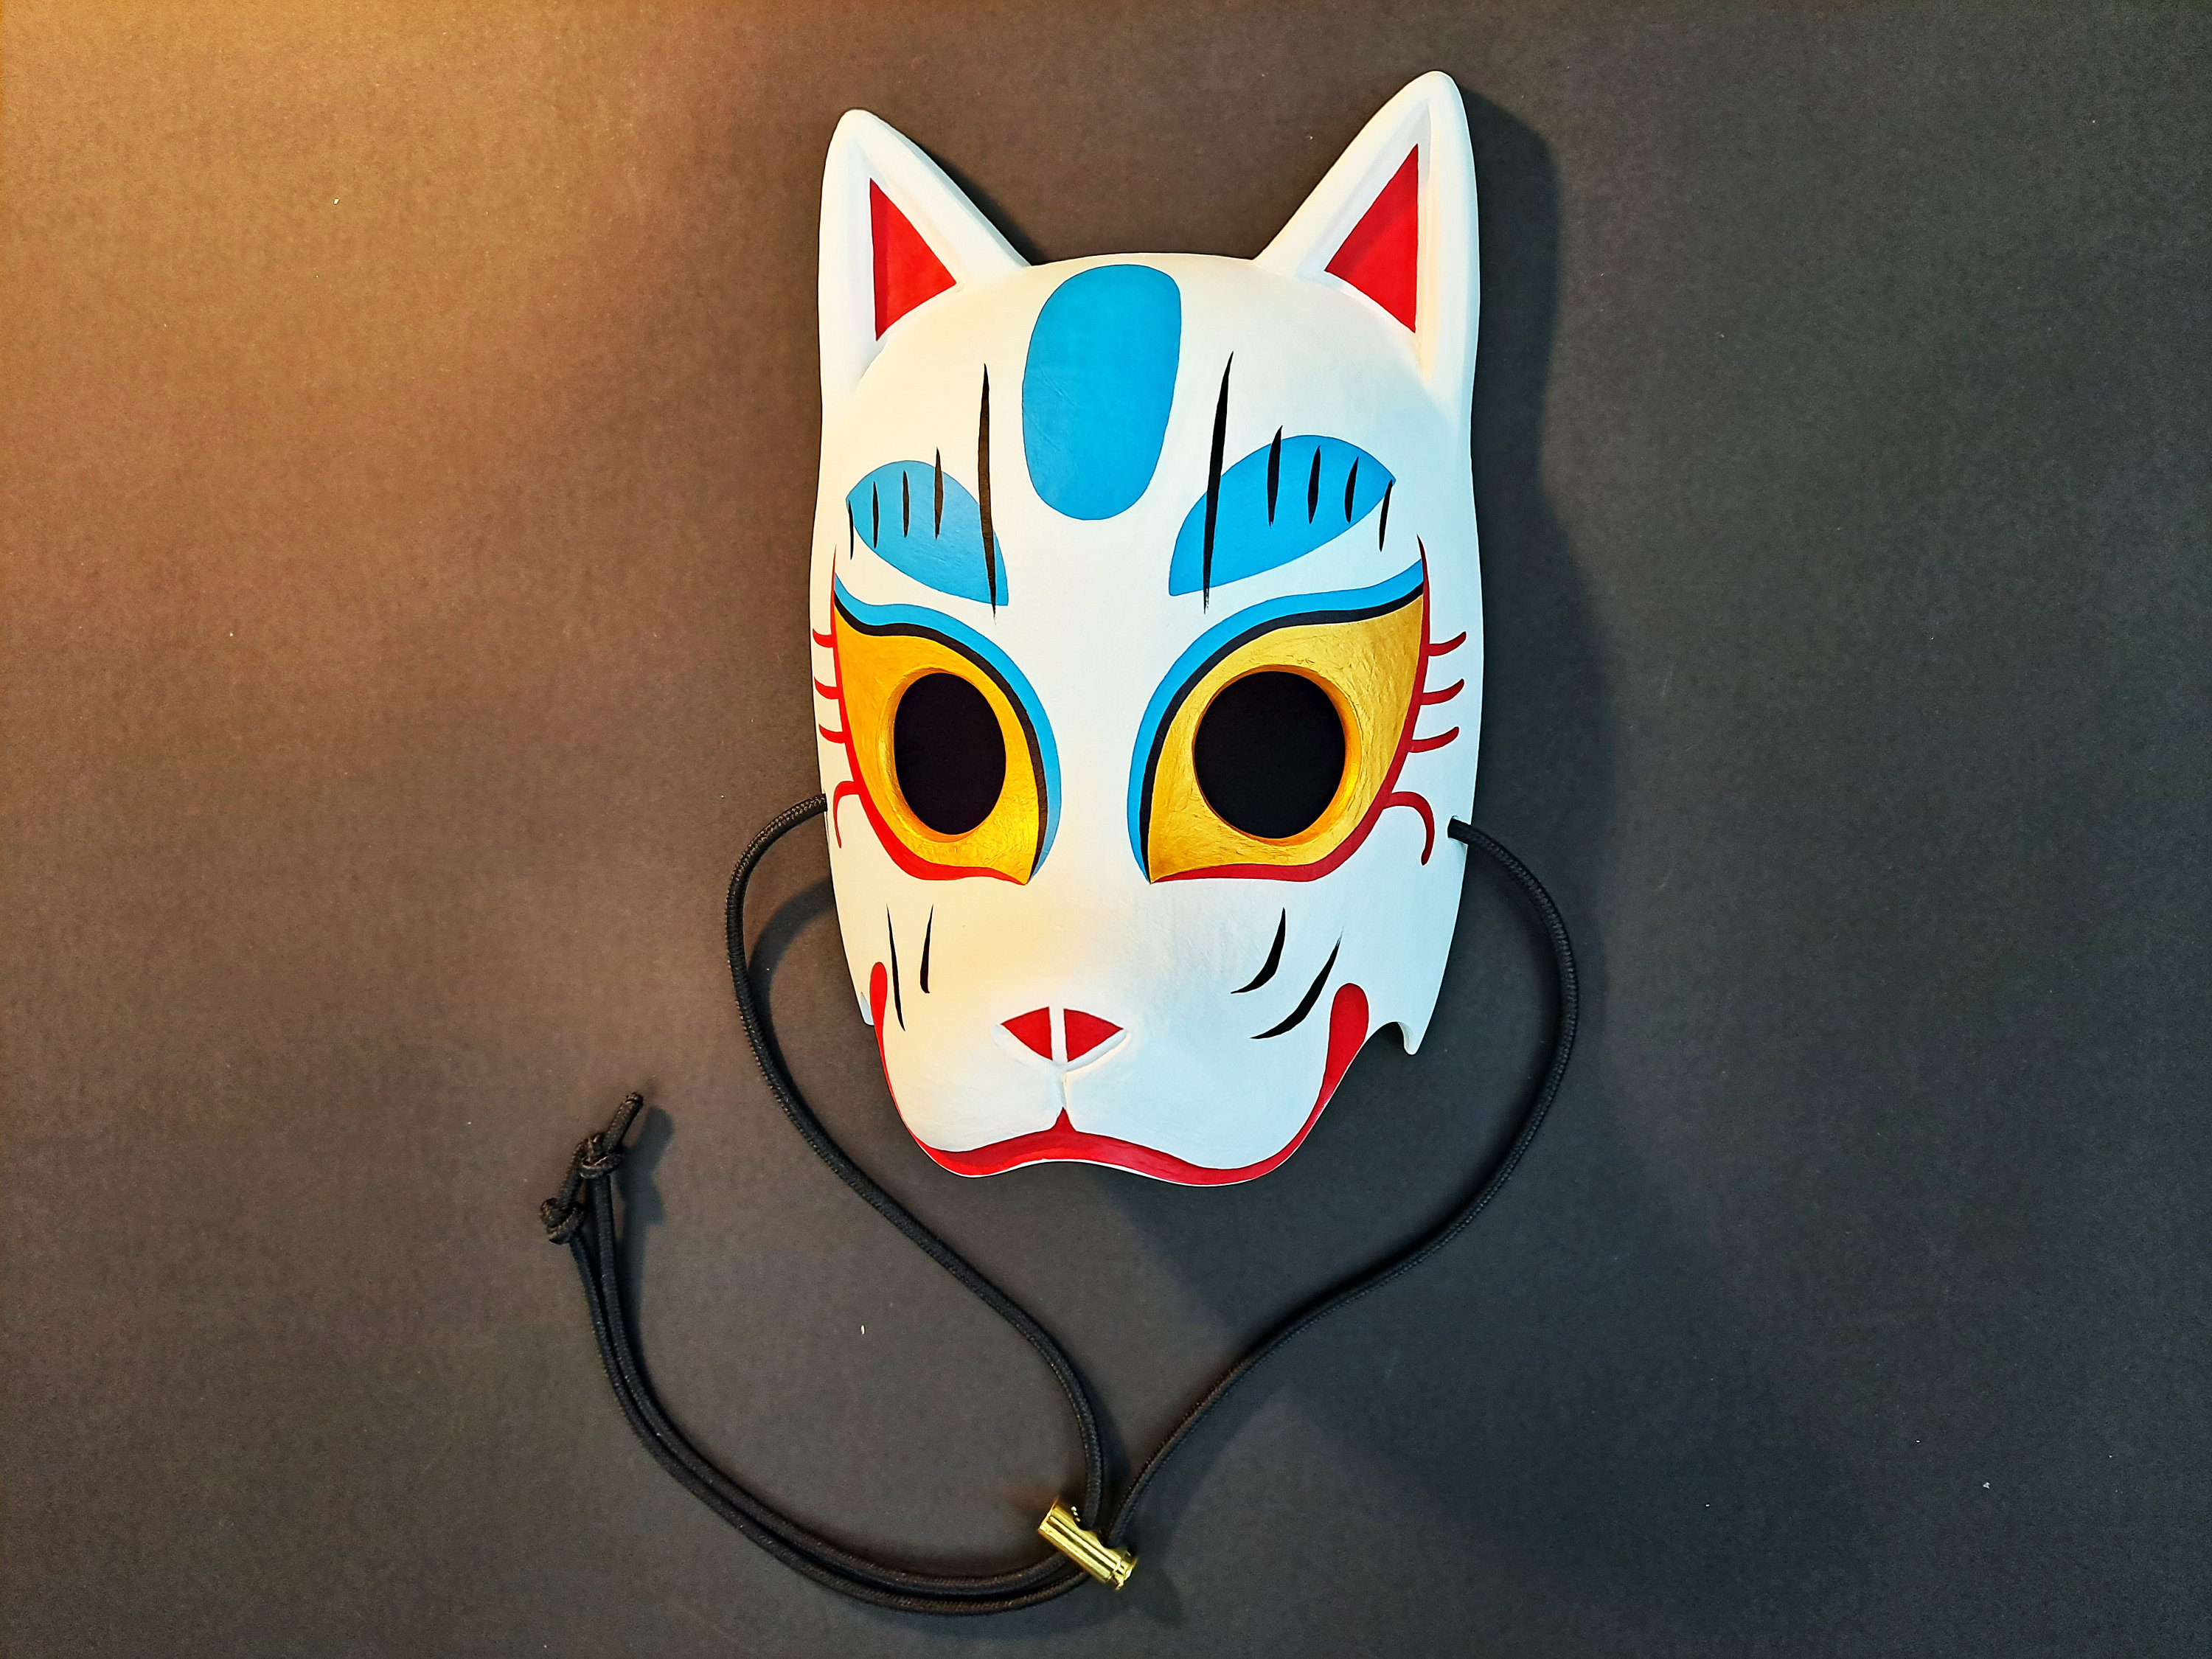 Kitsune Half Face Mask - The Demon Fox